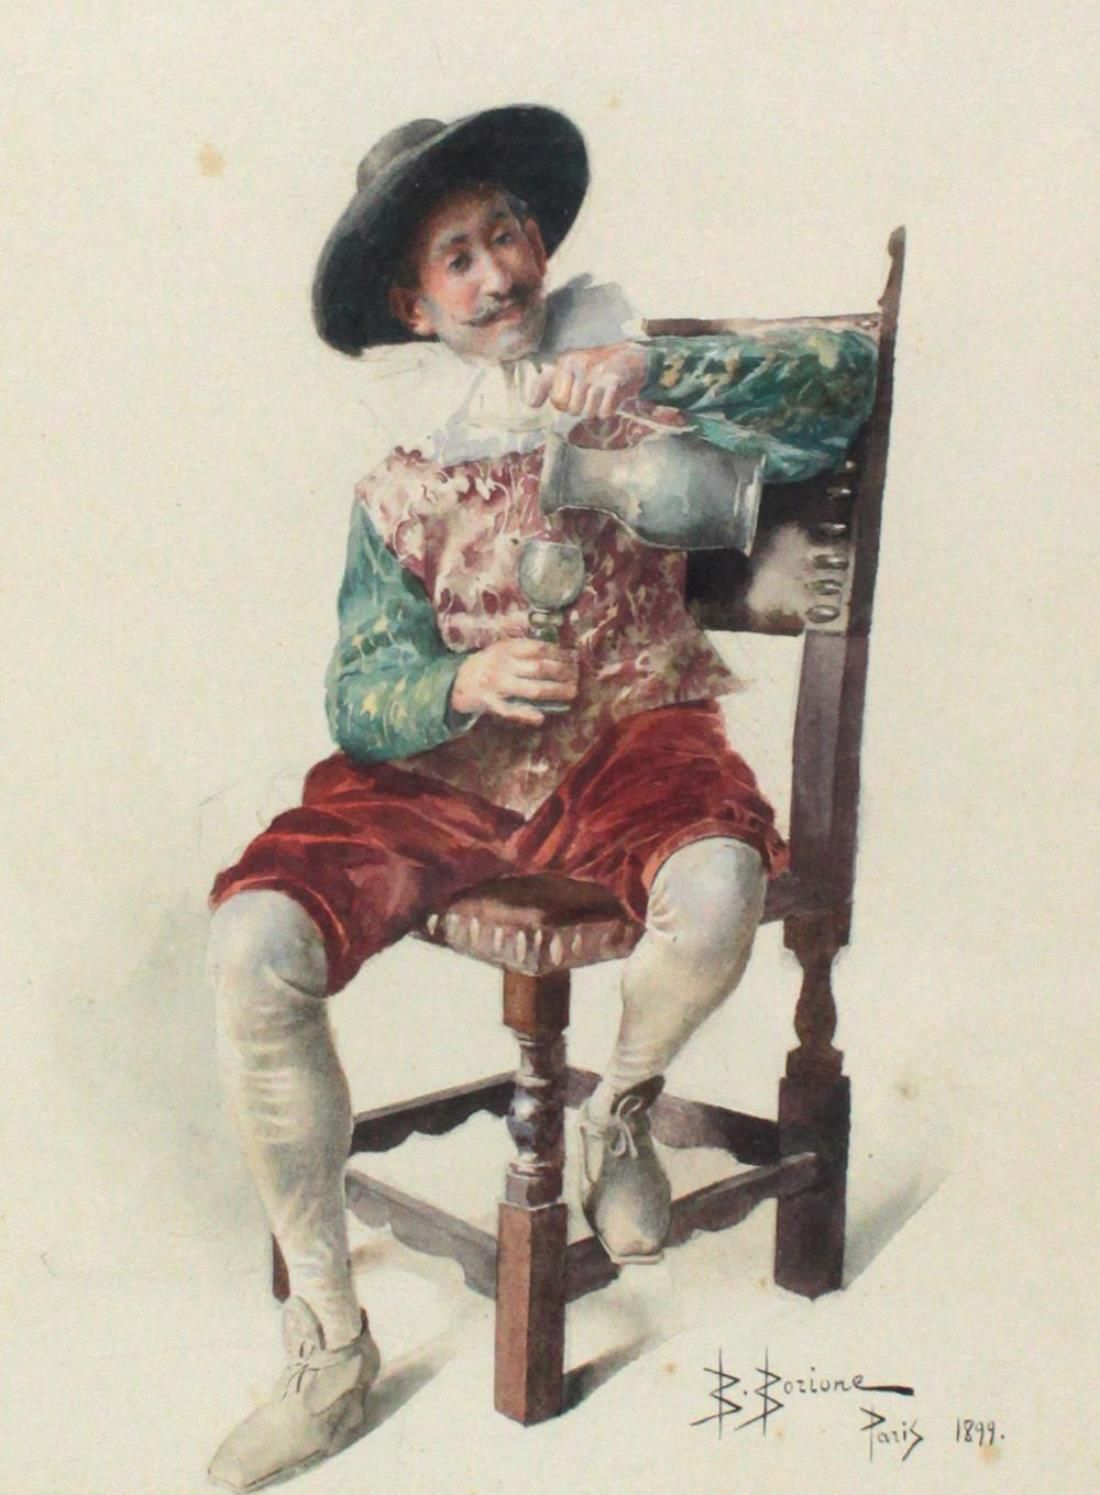 Borione, Bernard Louis (1865-约1920年在巴黎)。饮酒的男人，胡须扭曲，坐在椅子上。水彩画 1899年。约19,5 x 12厘米。&hellip;